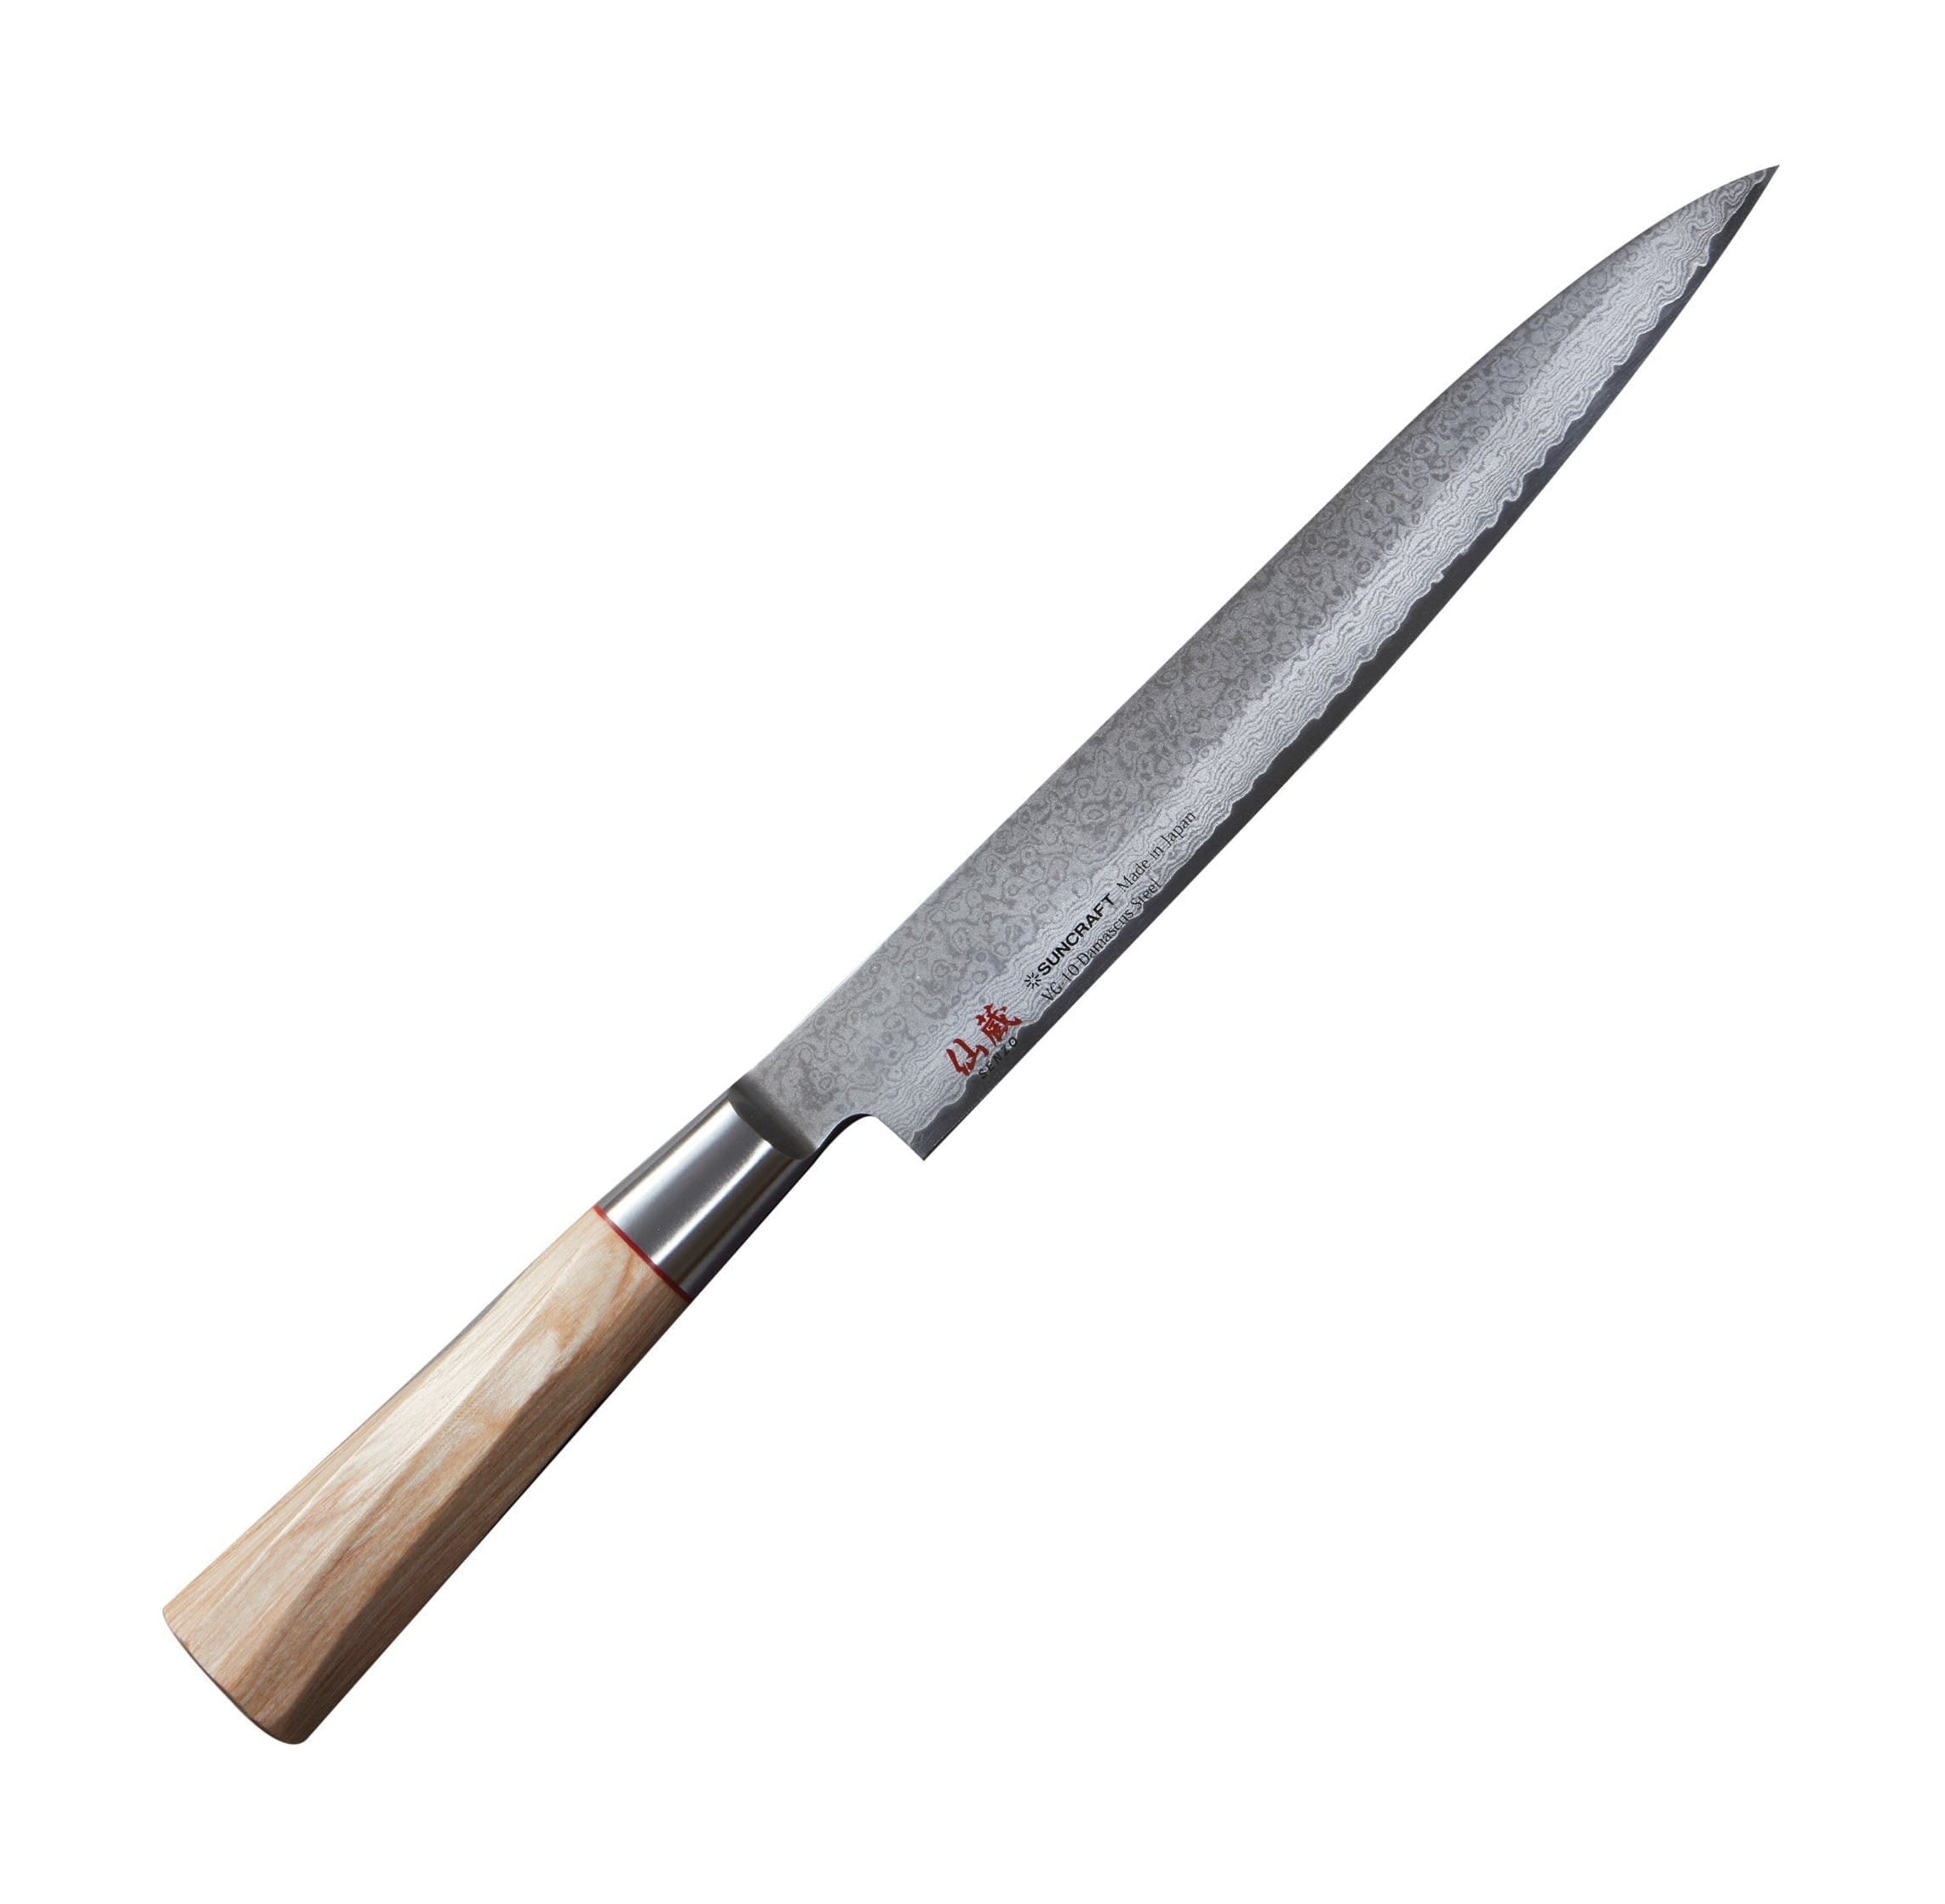 Senzo til 07 Sashimi kniv, 21 cm